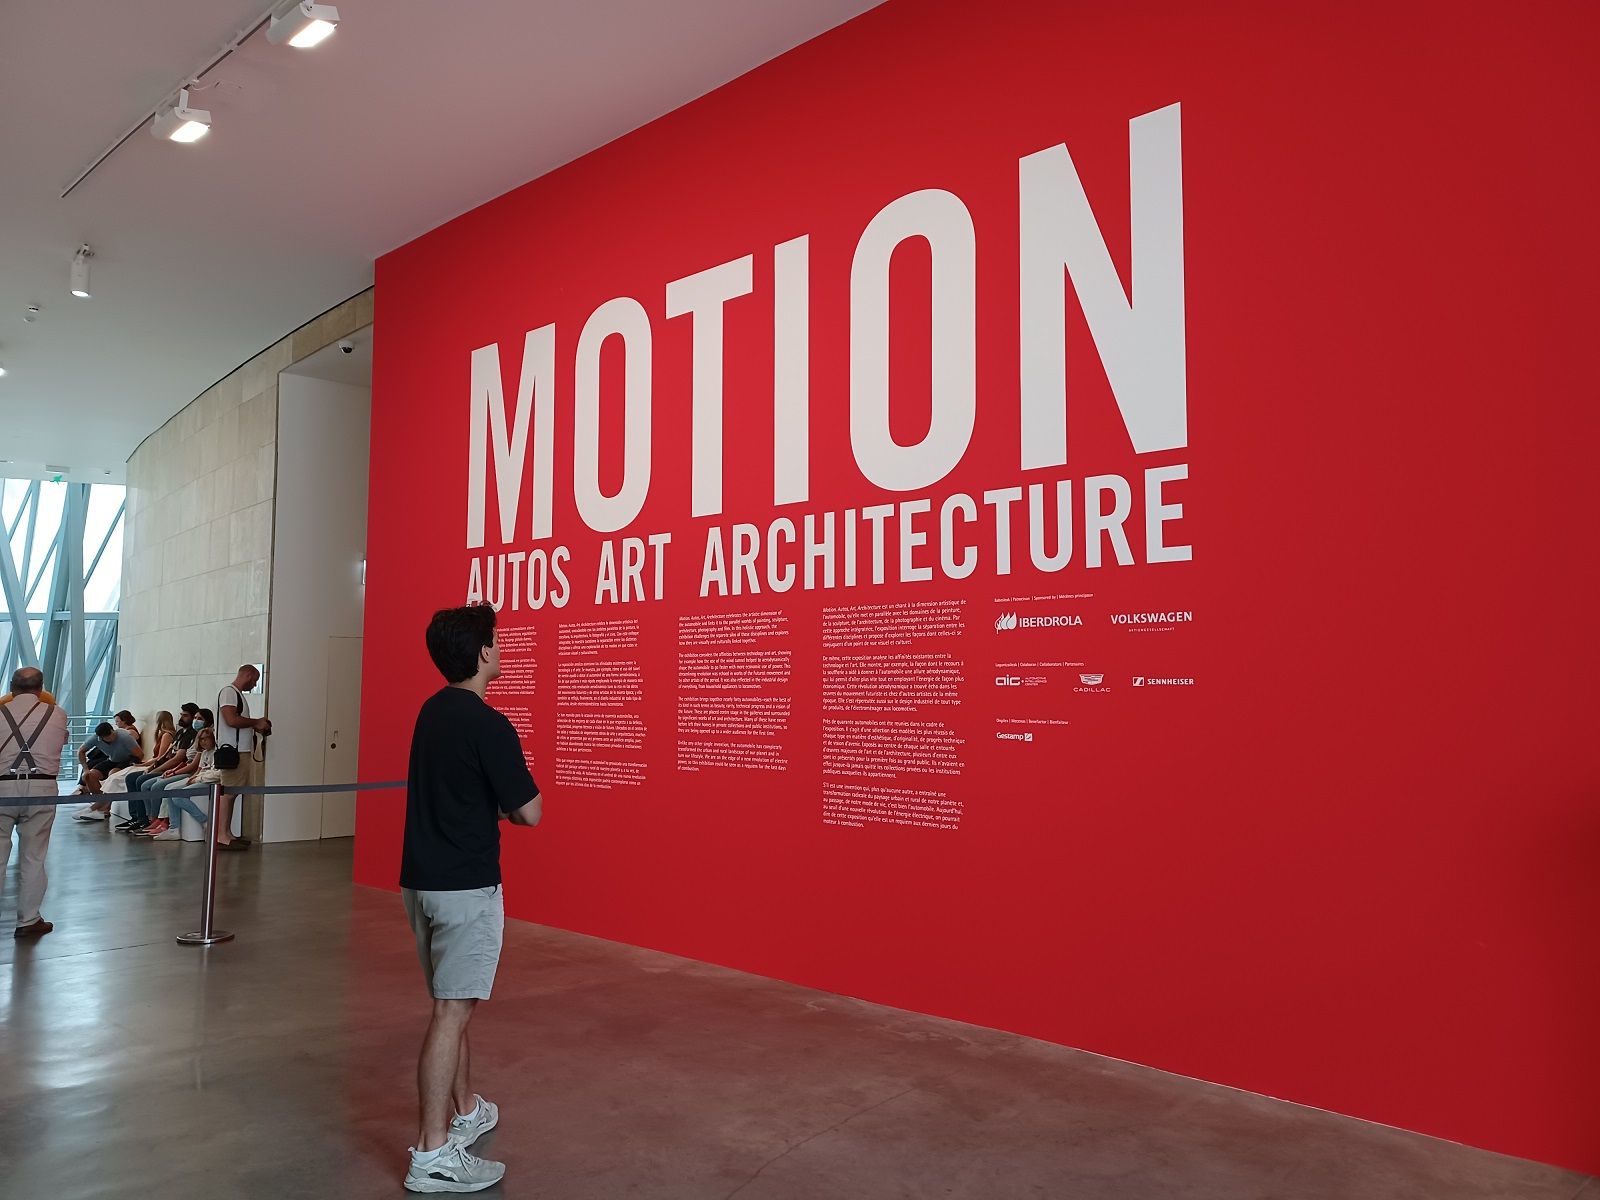 Baron Norman Foster_Motion: Autos, Art, Architecture Exhibition_Spain_01 